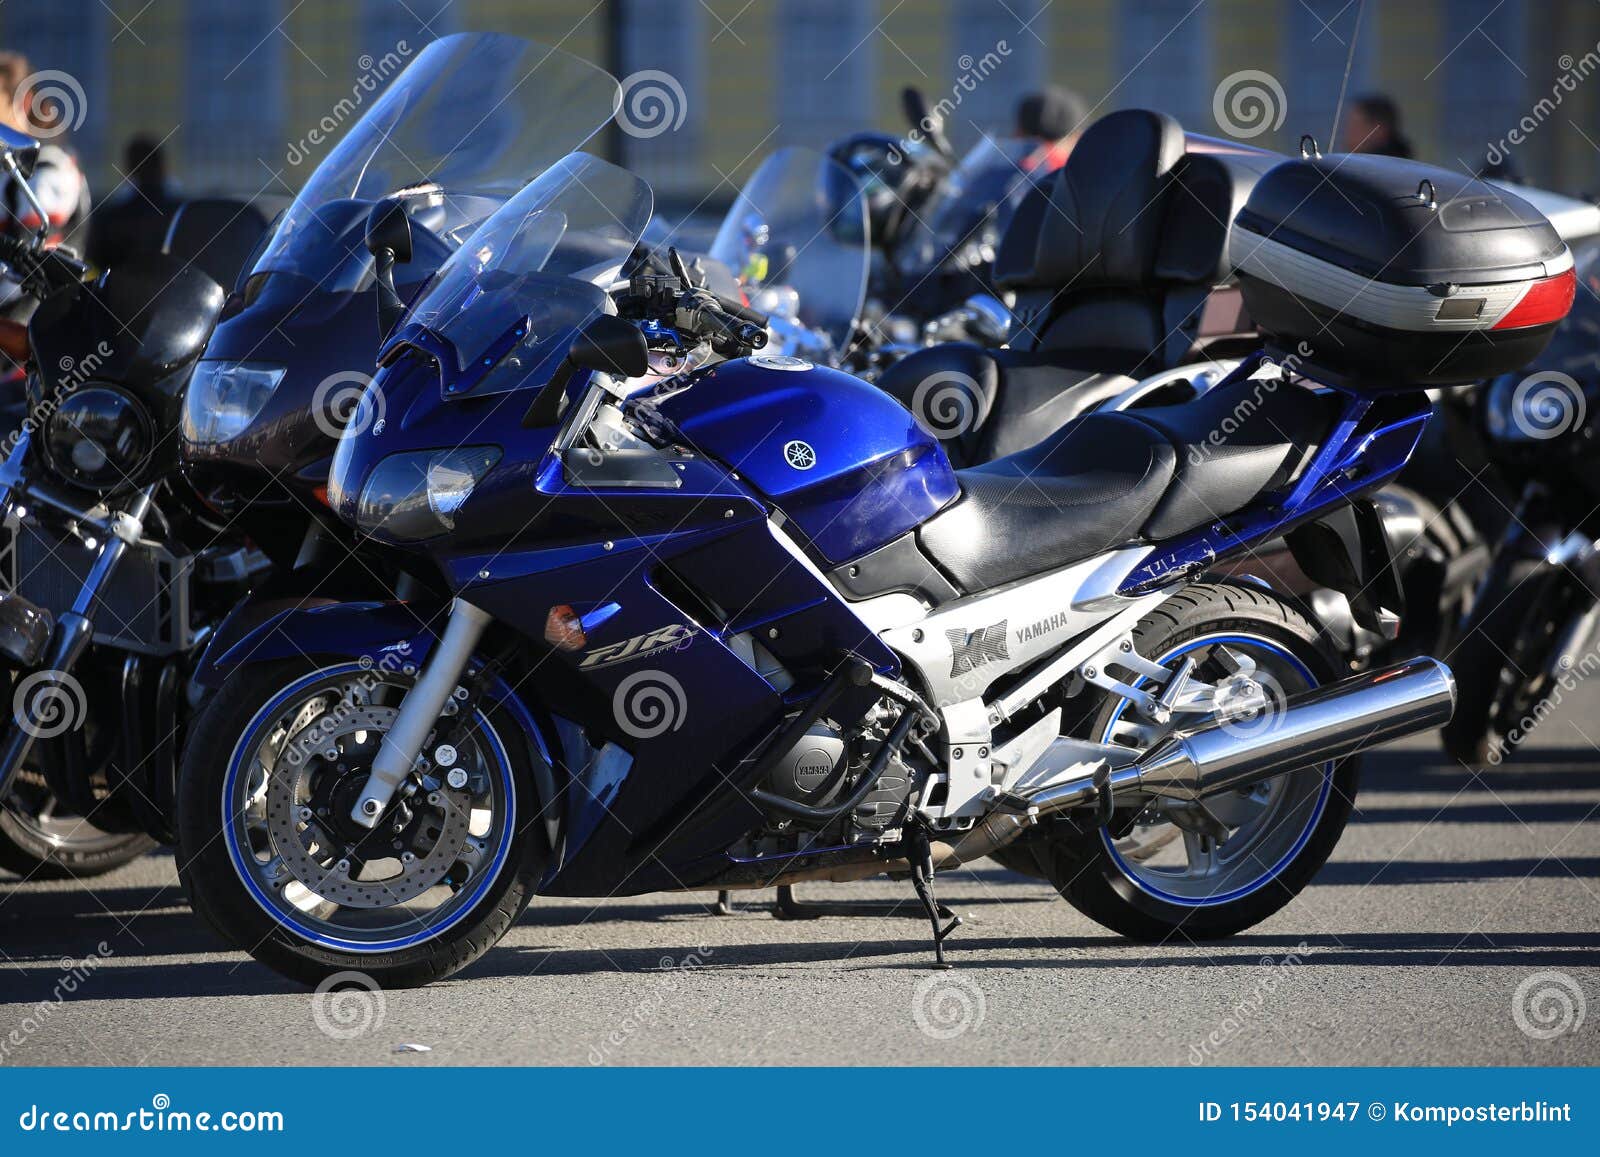 sport tourist motorcycle